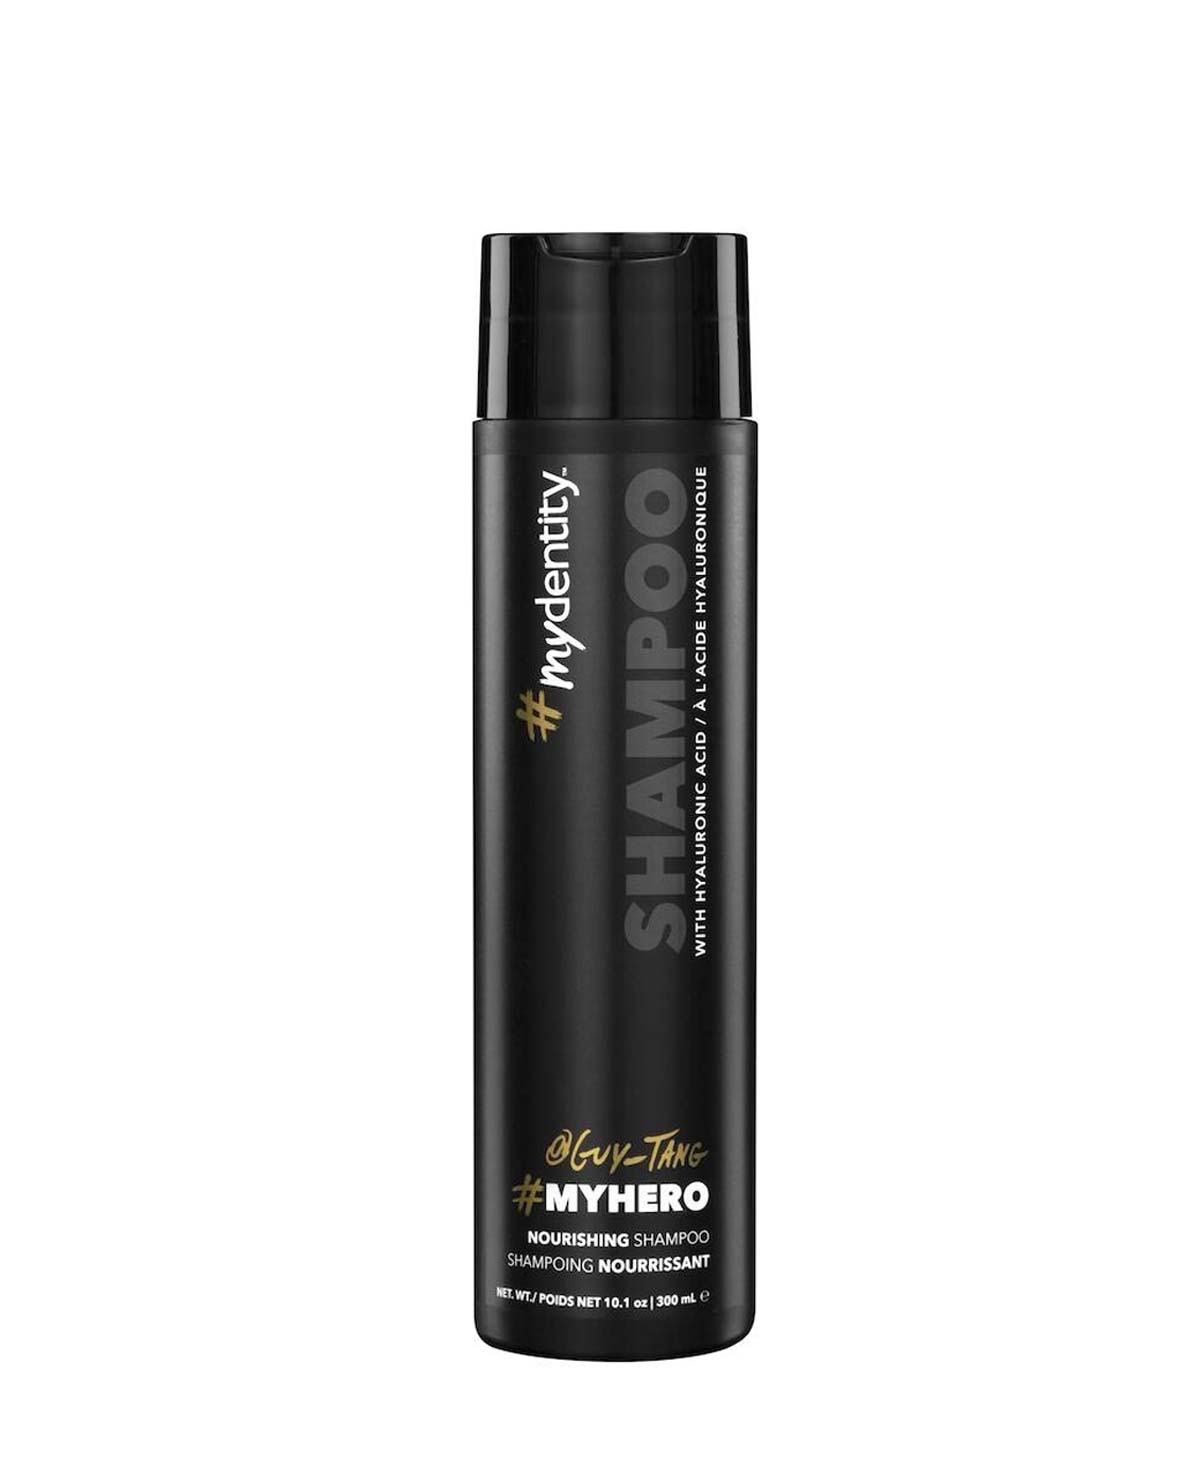 Mydentity - MyHero Nourishing Shampoo 300ml 